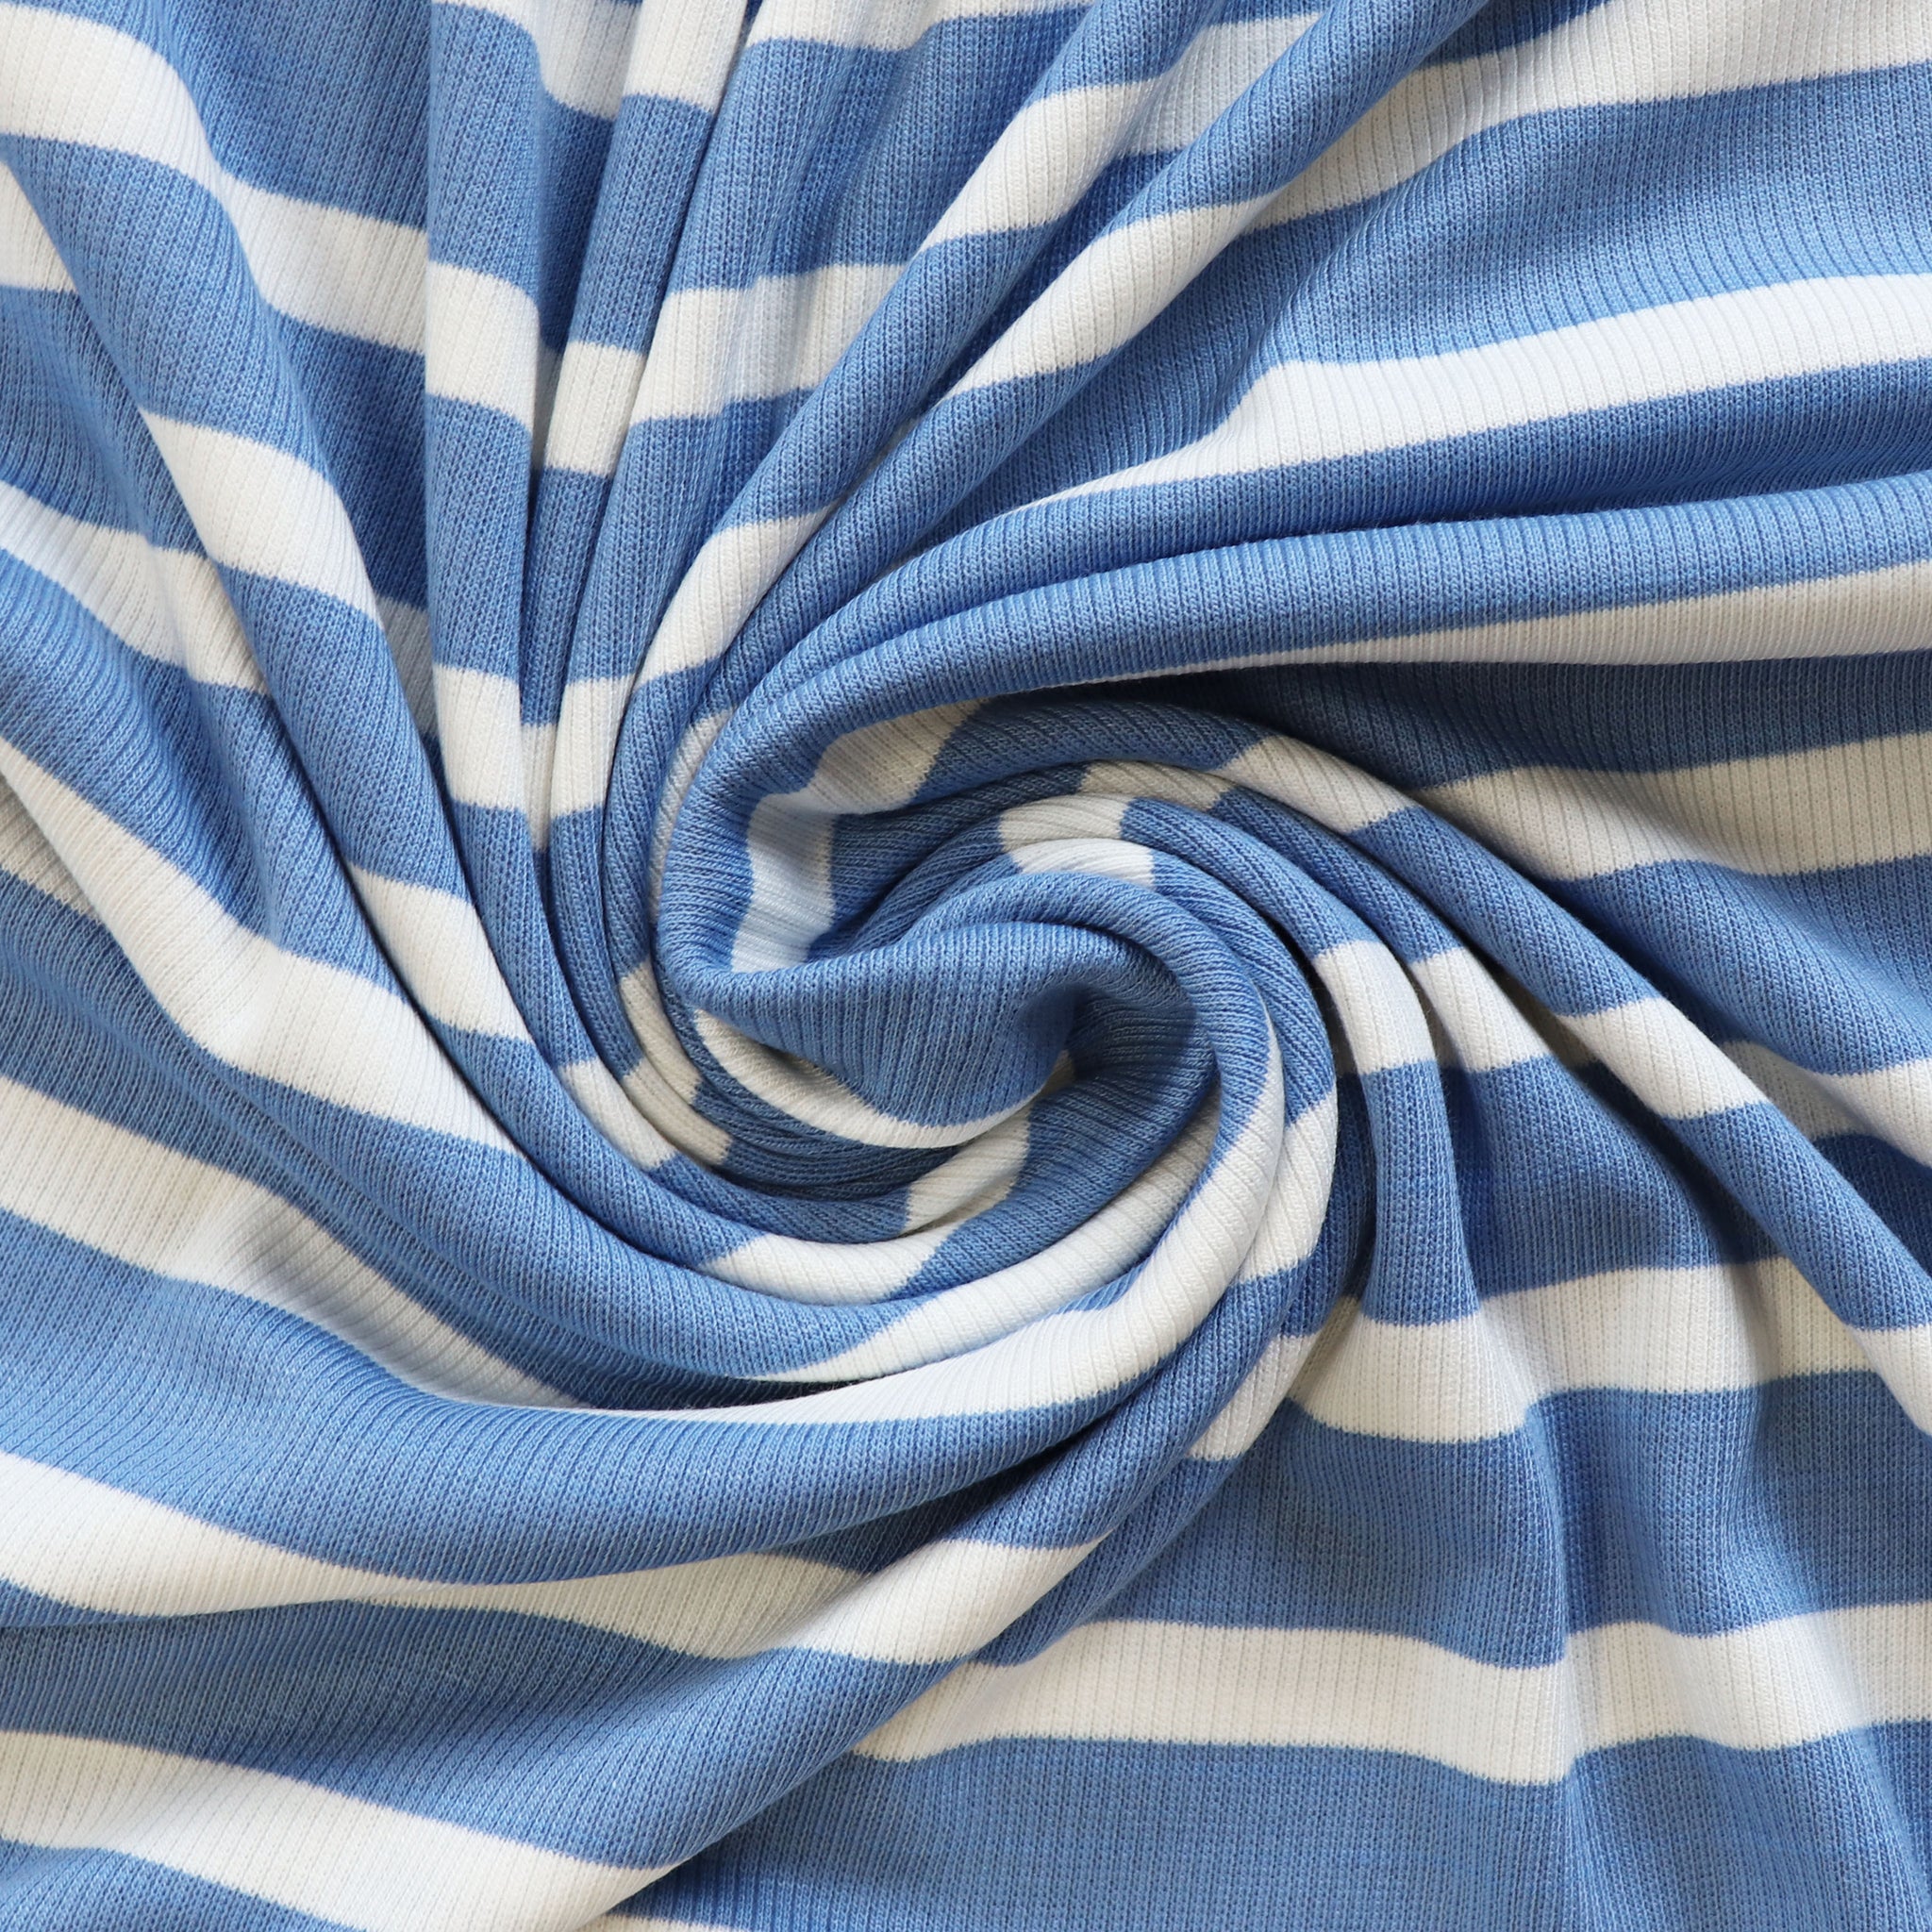 White and Royal Blue Stripes - Jersey Knit